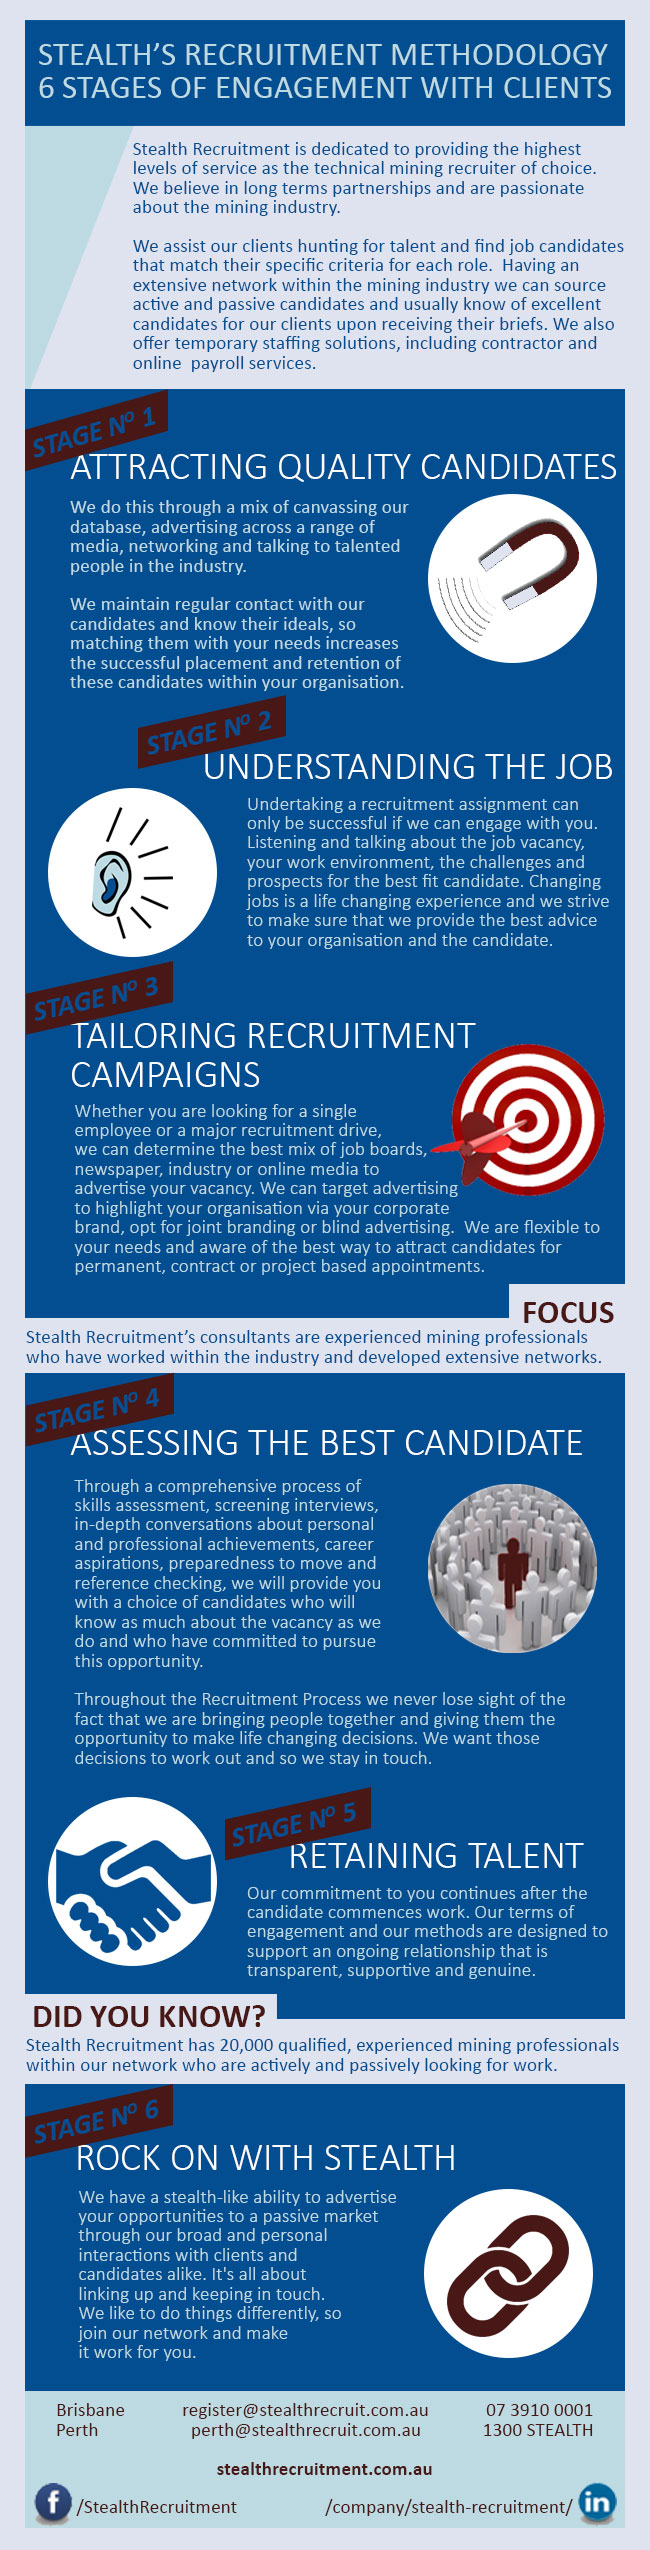 recruitment-methodology